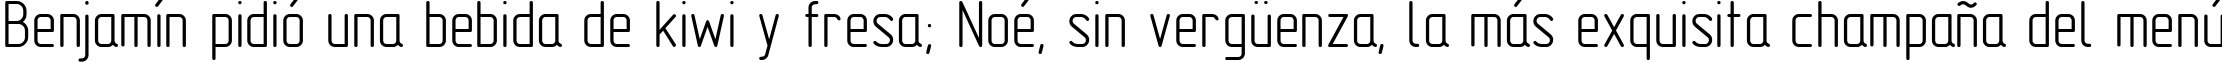 Пример написания шрифтом GOST Type AU текста на испанском